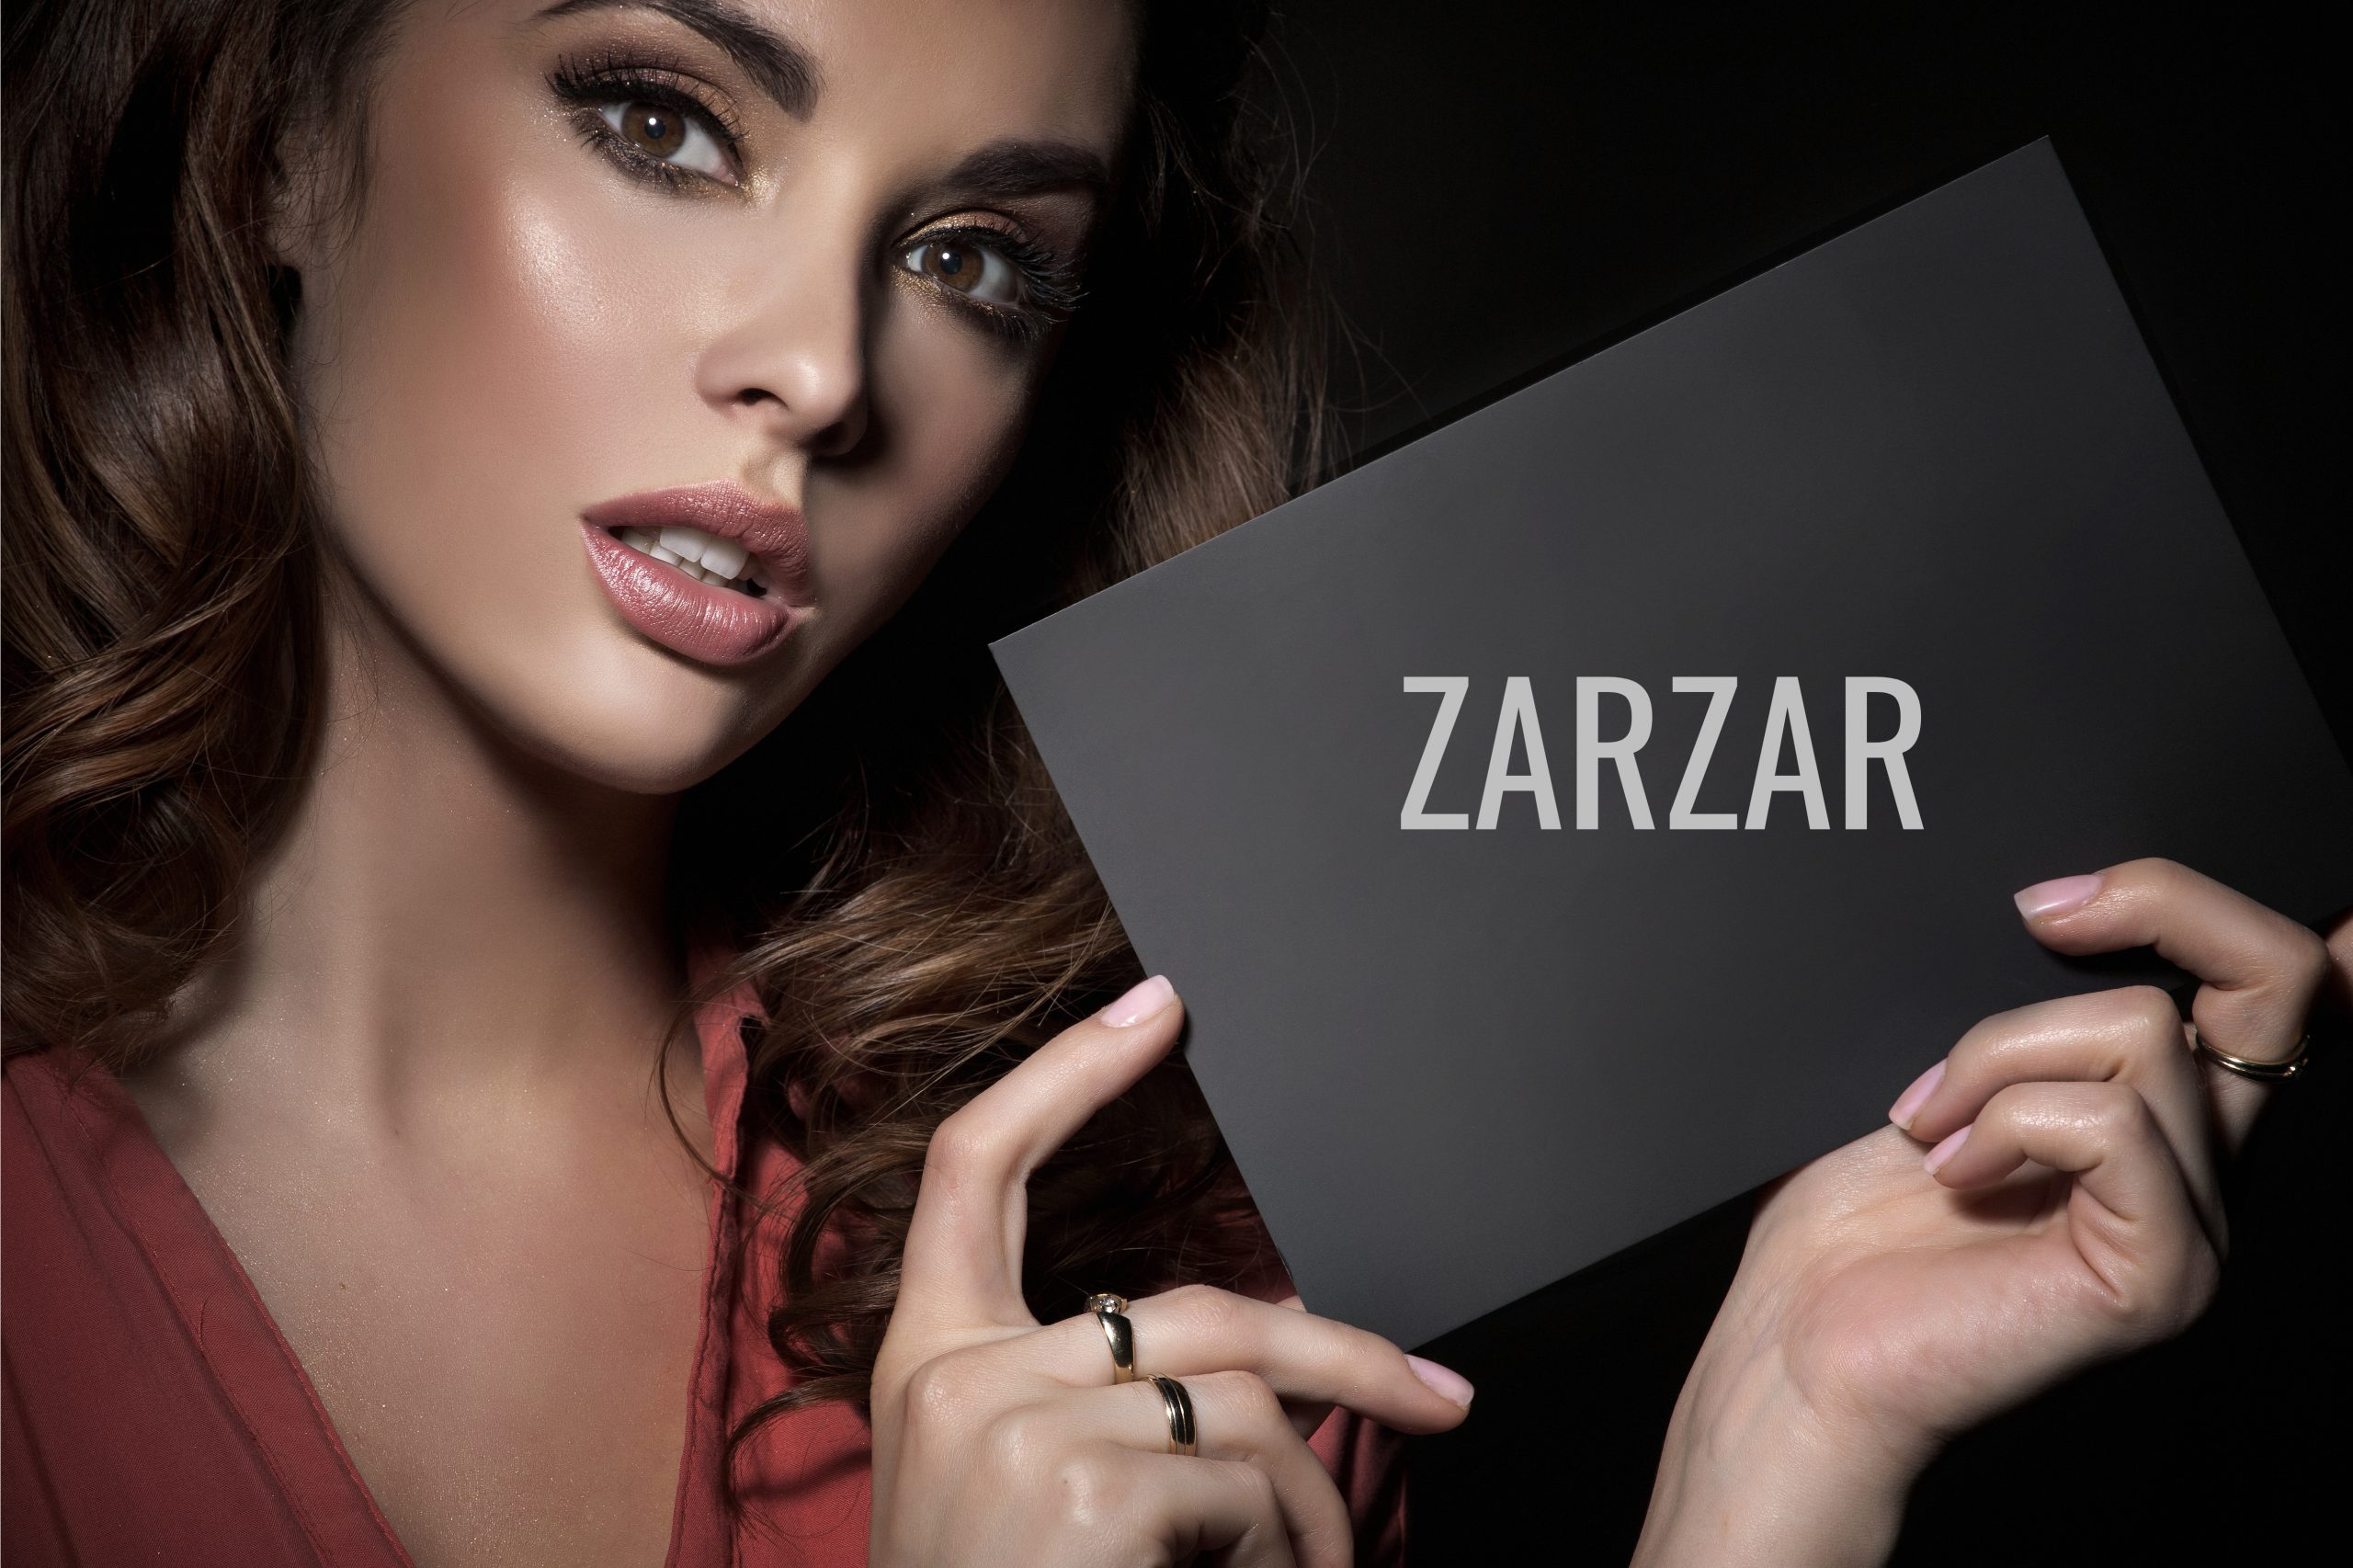 ZARZAR MODELS Top Modeling Agency Los Angeles New York San Diego Las Vegas Miami Orange County California Fashion Models